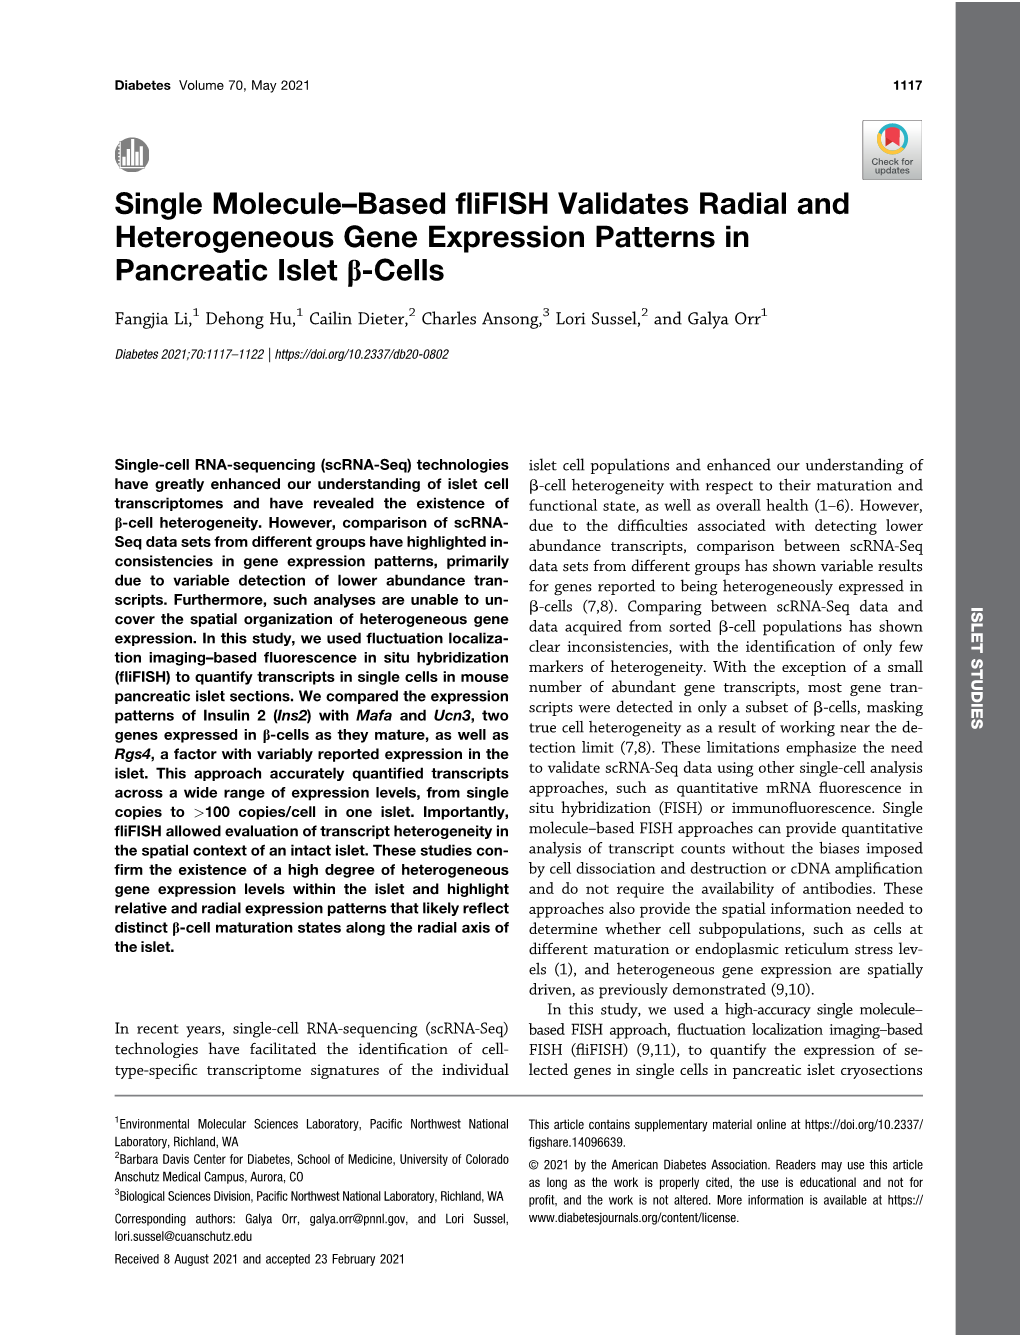 Single Molecule–Based Flifish Validates Radial and Heterogeneous Gene Expression Patterns in Pancreatic Islet B-Cells